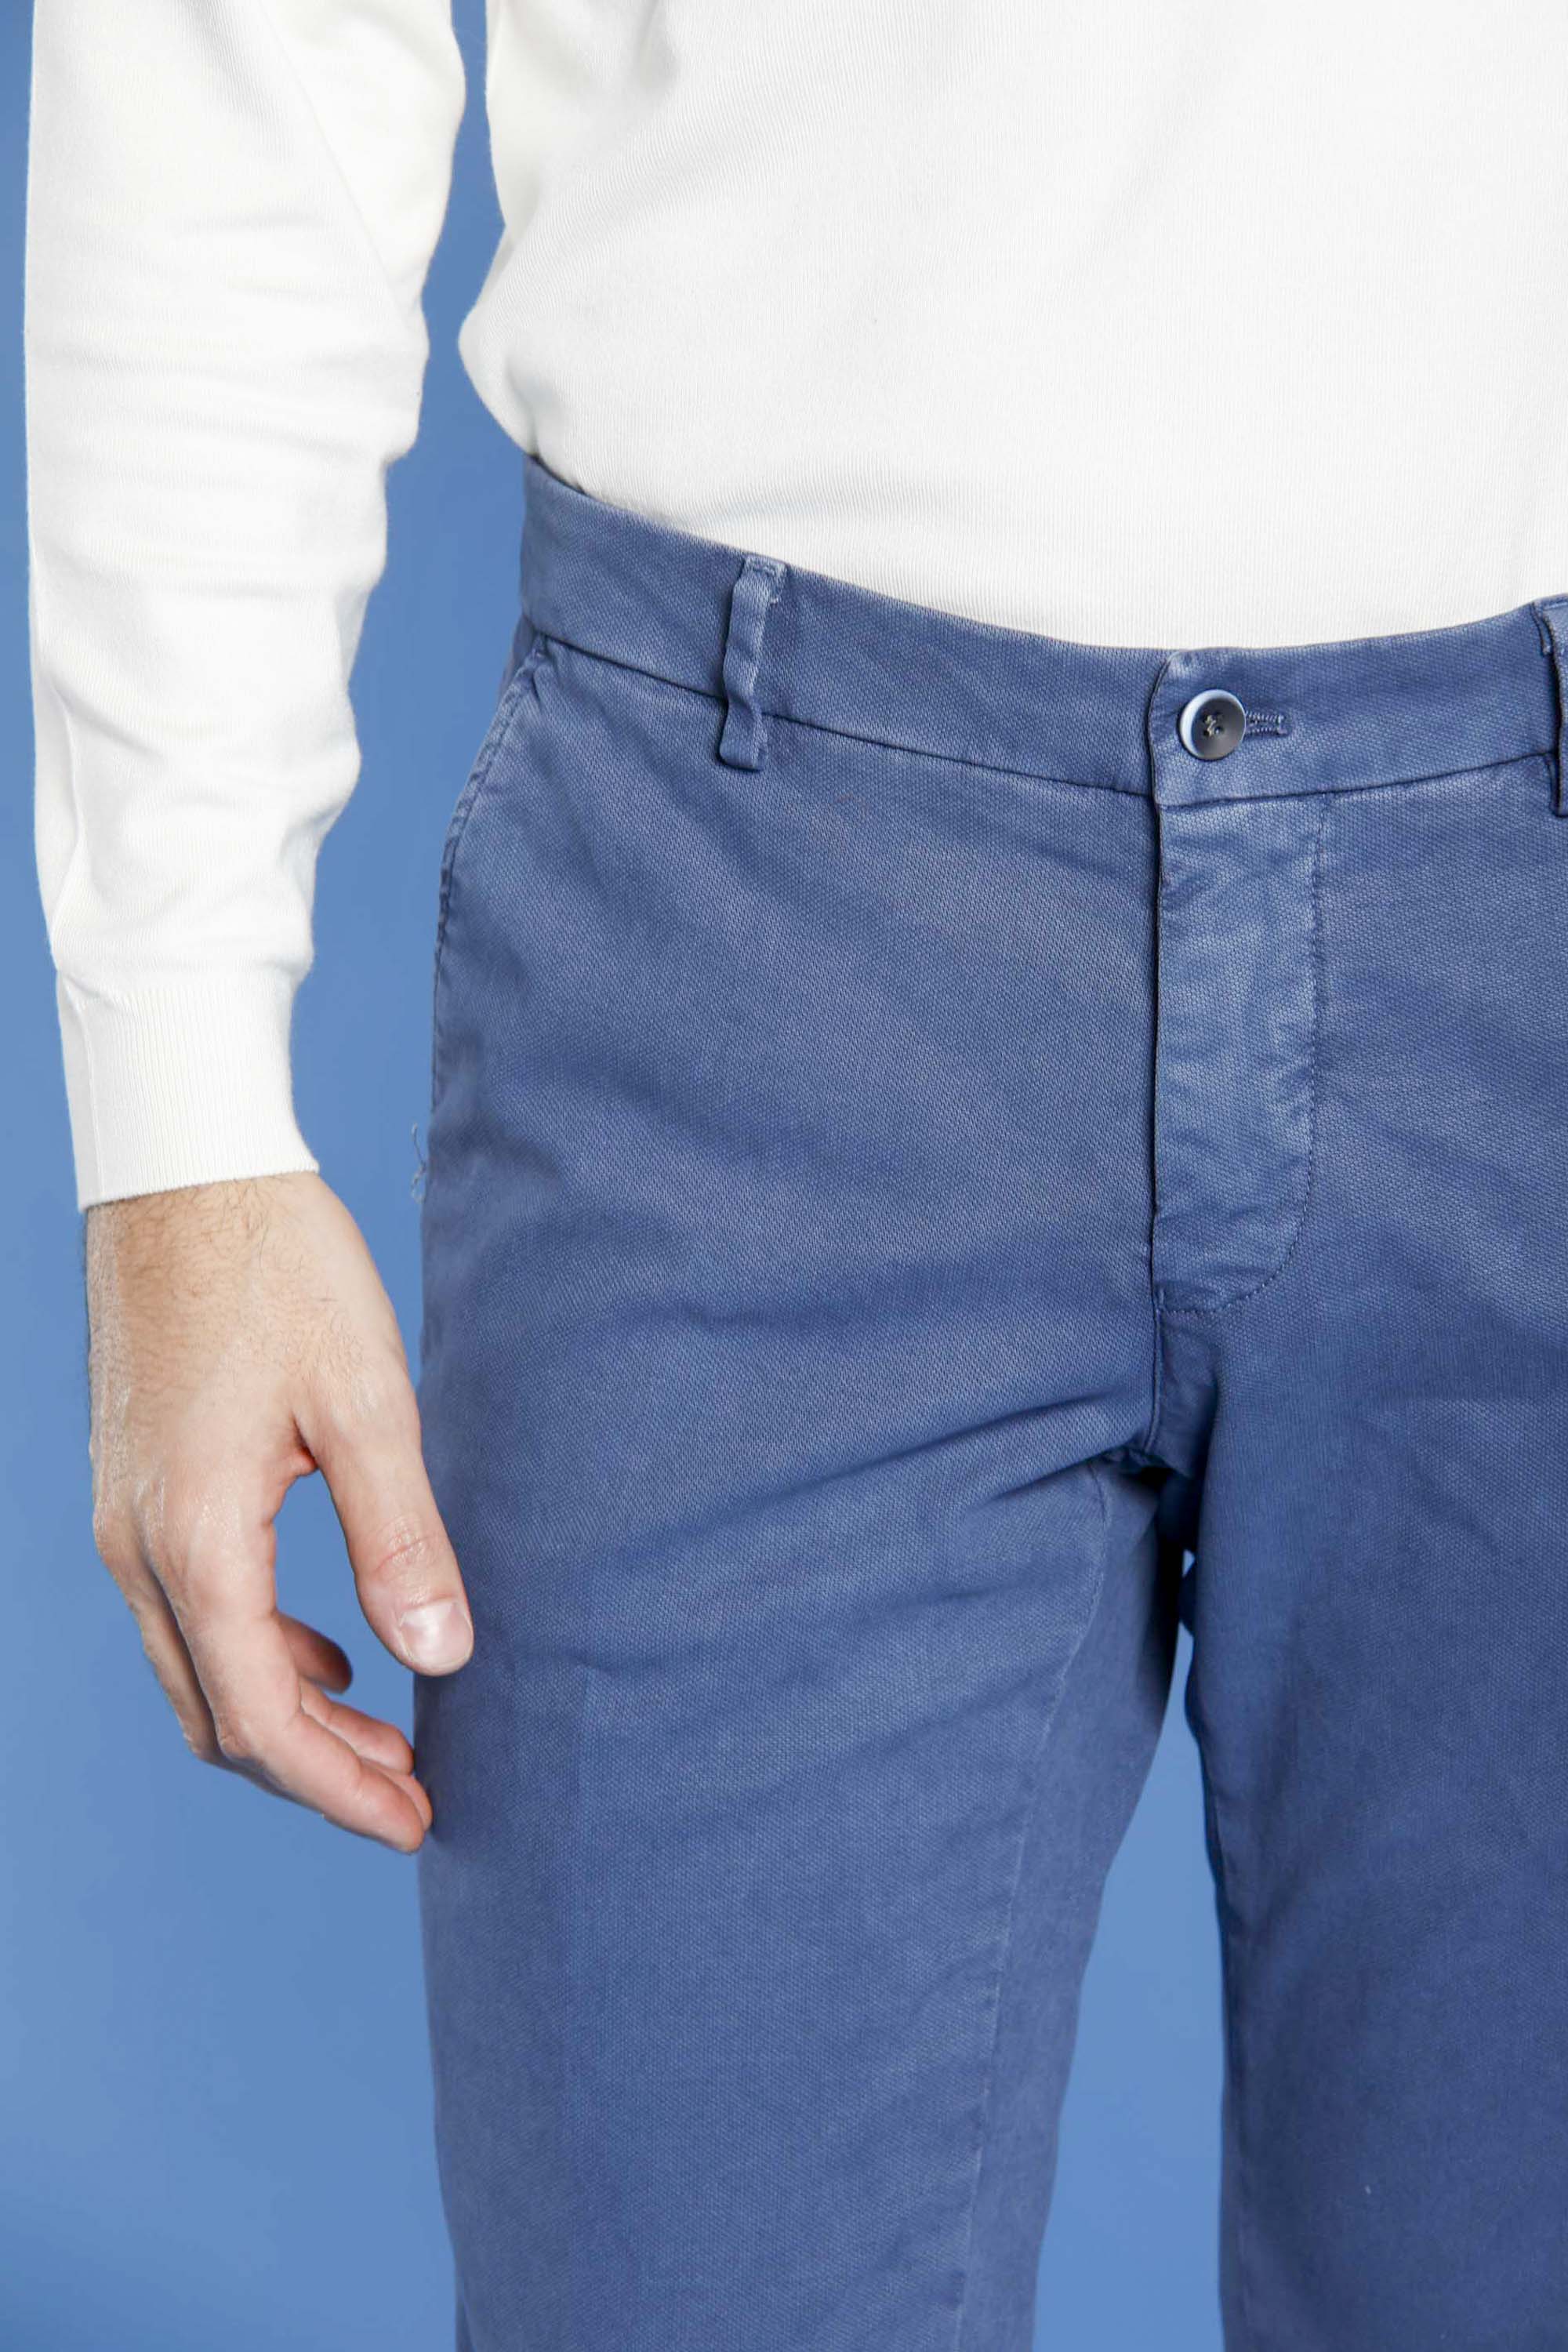 Milano Style pantalon chino homme en gabardine et modal stretch coupe extra slim ①